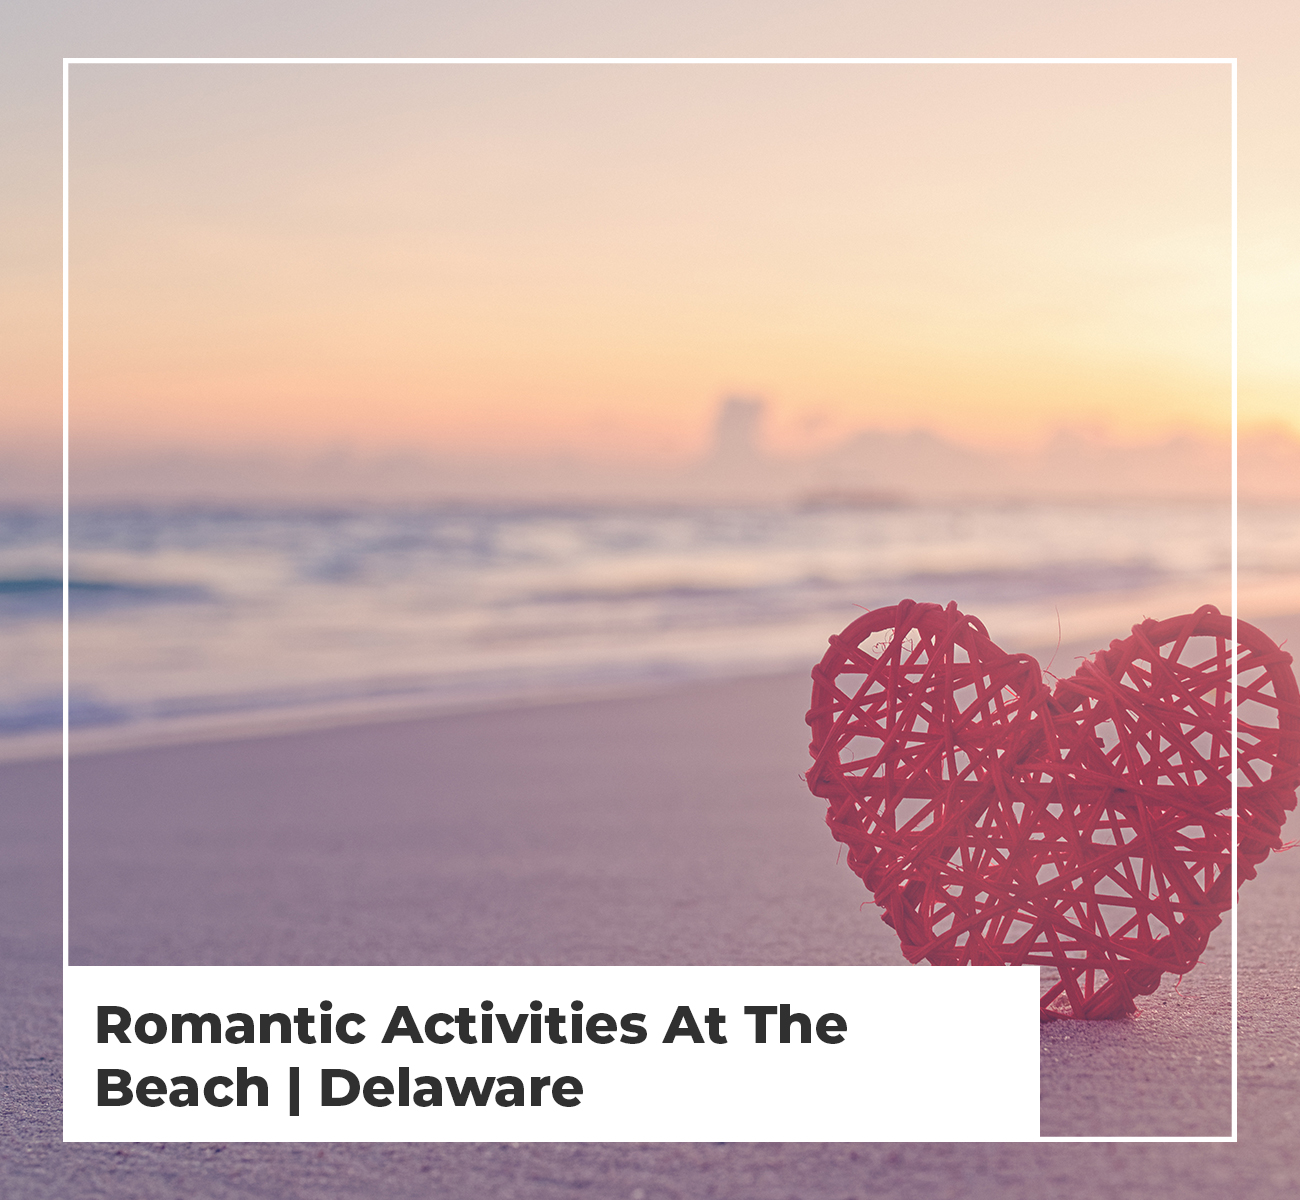 Romantic Activities at the Beach - Delaware